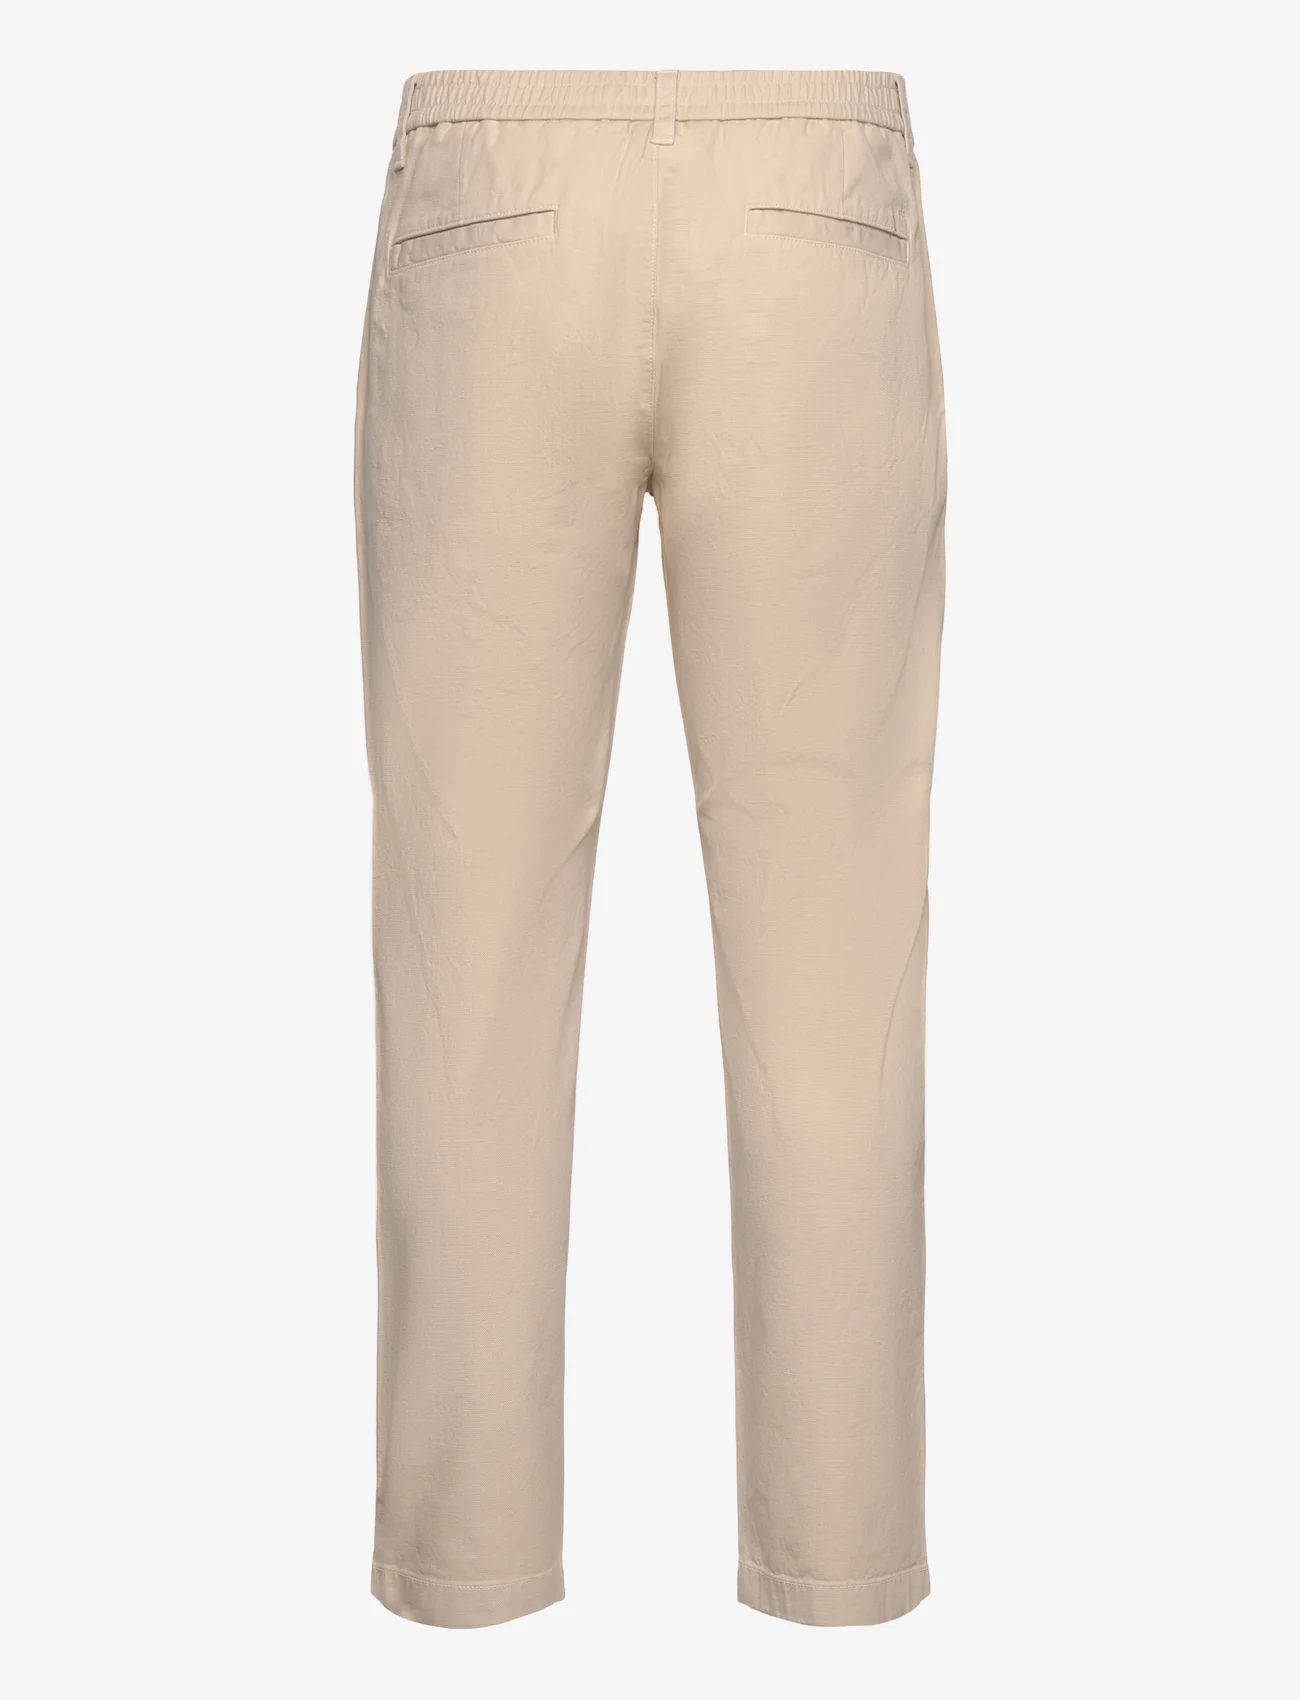 Marc O'Polo - WOVEN PANTS - casual bukser - linen white - 1